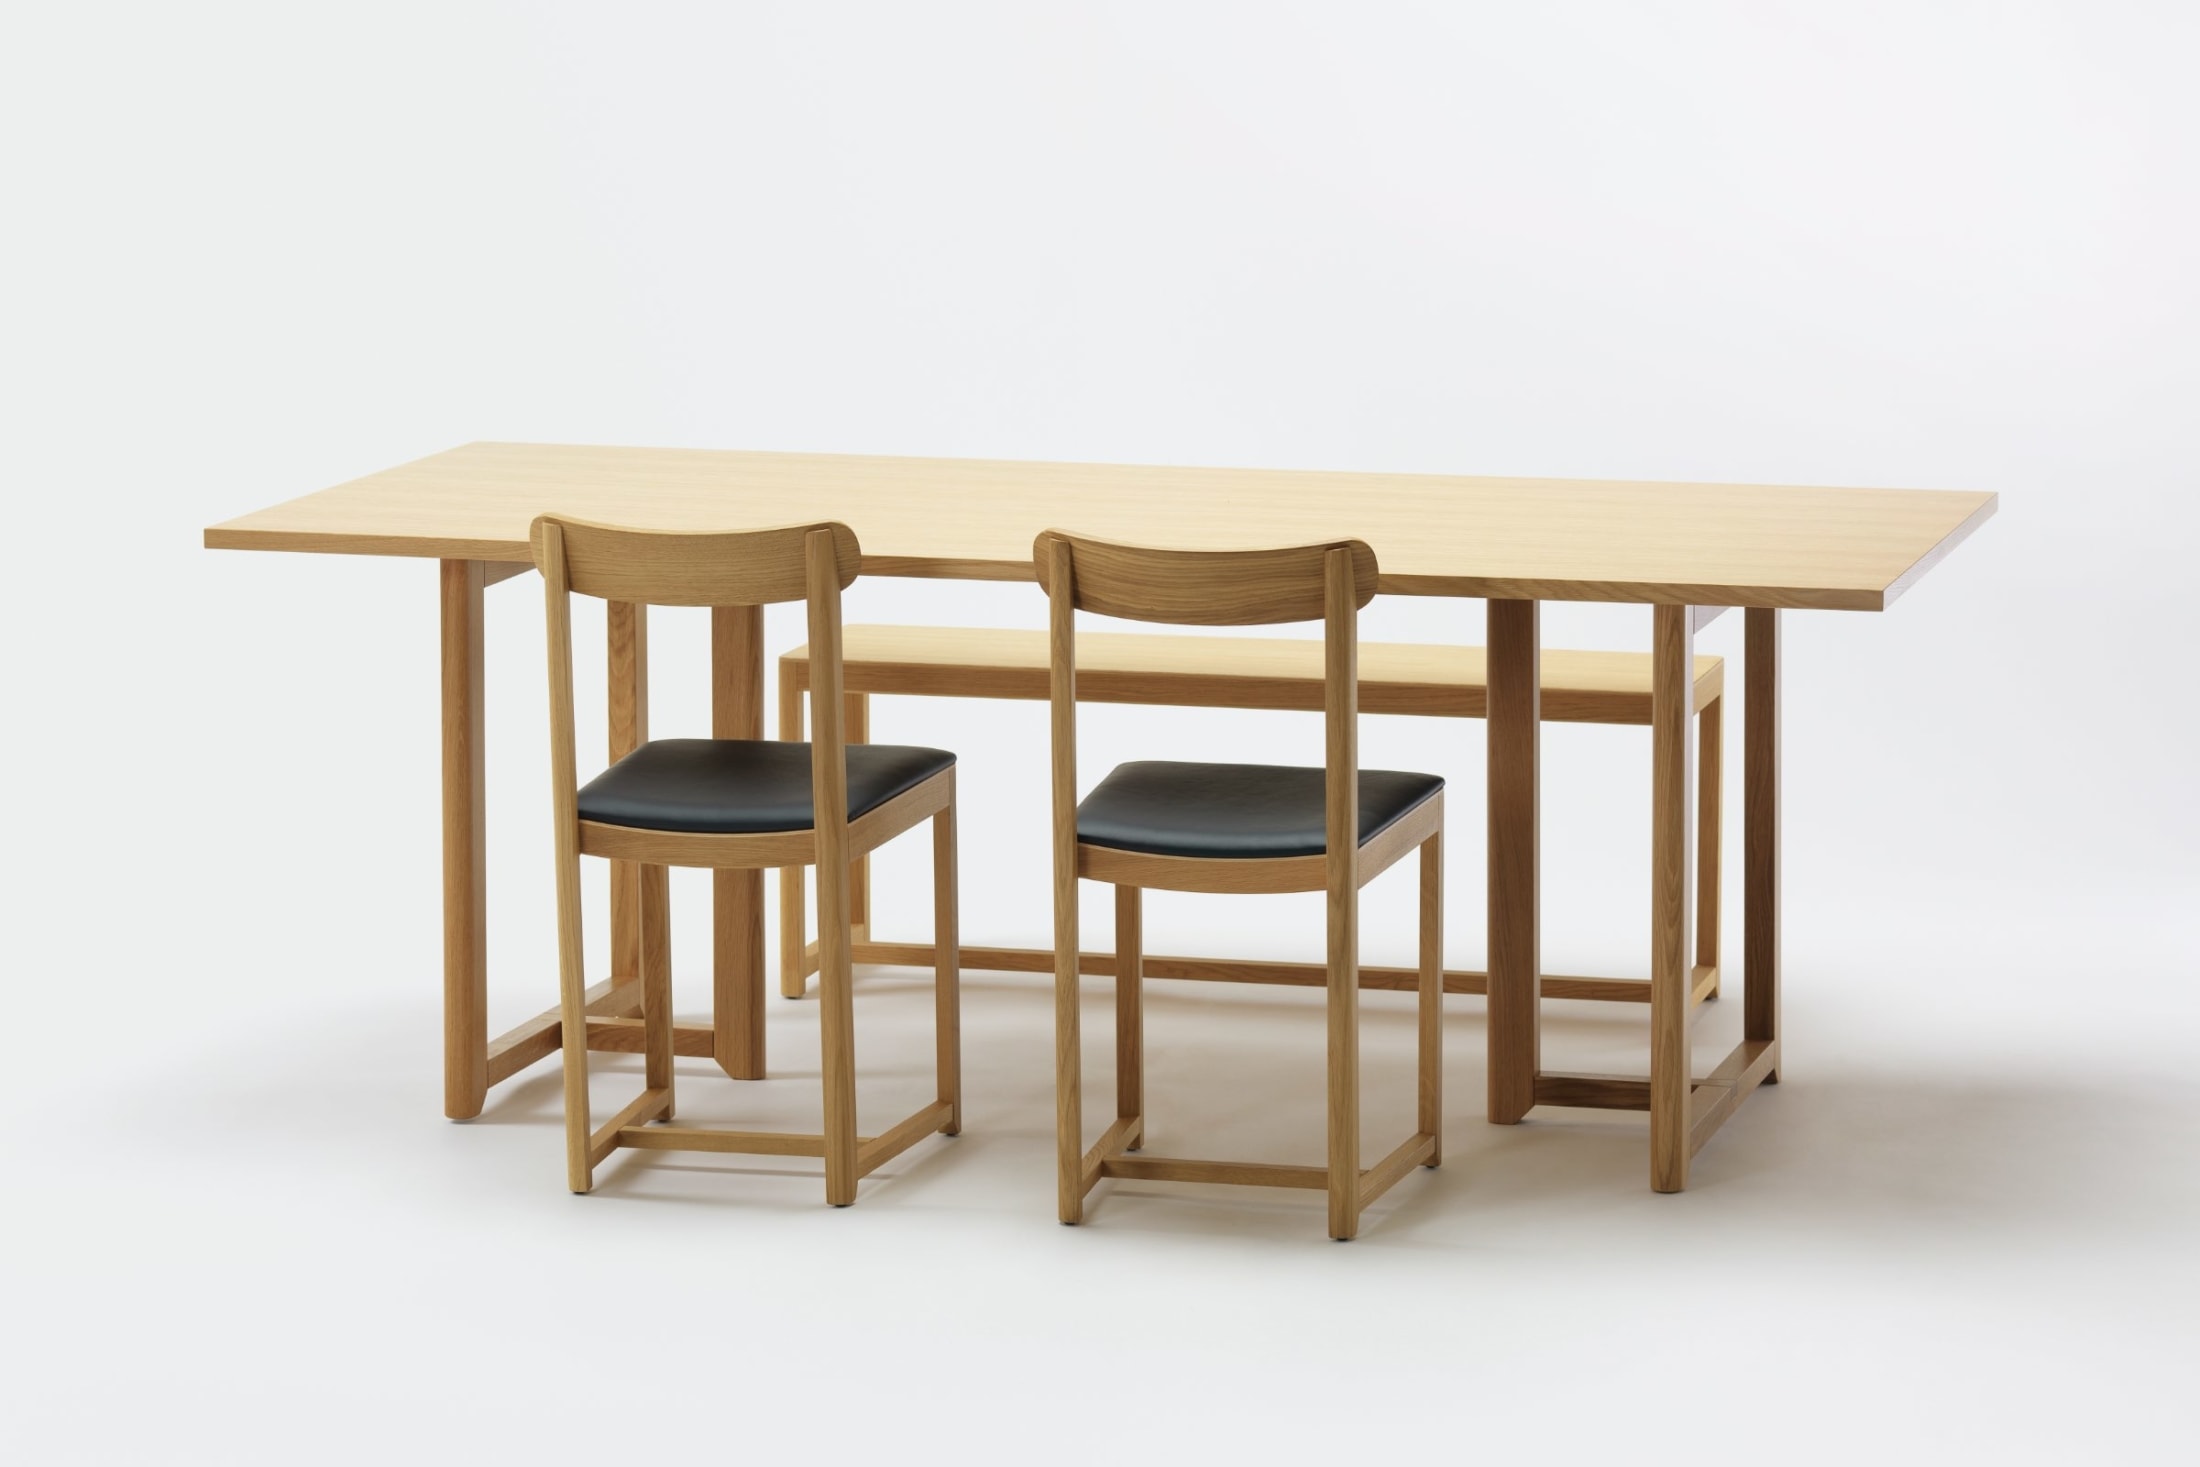 Furniture Design by London Studio Mentsen 1